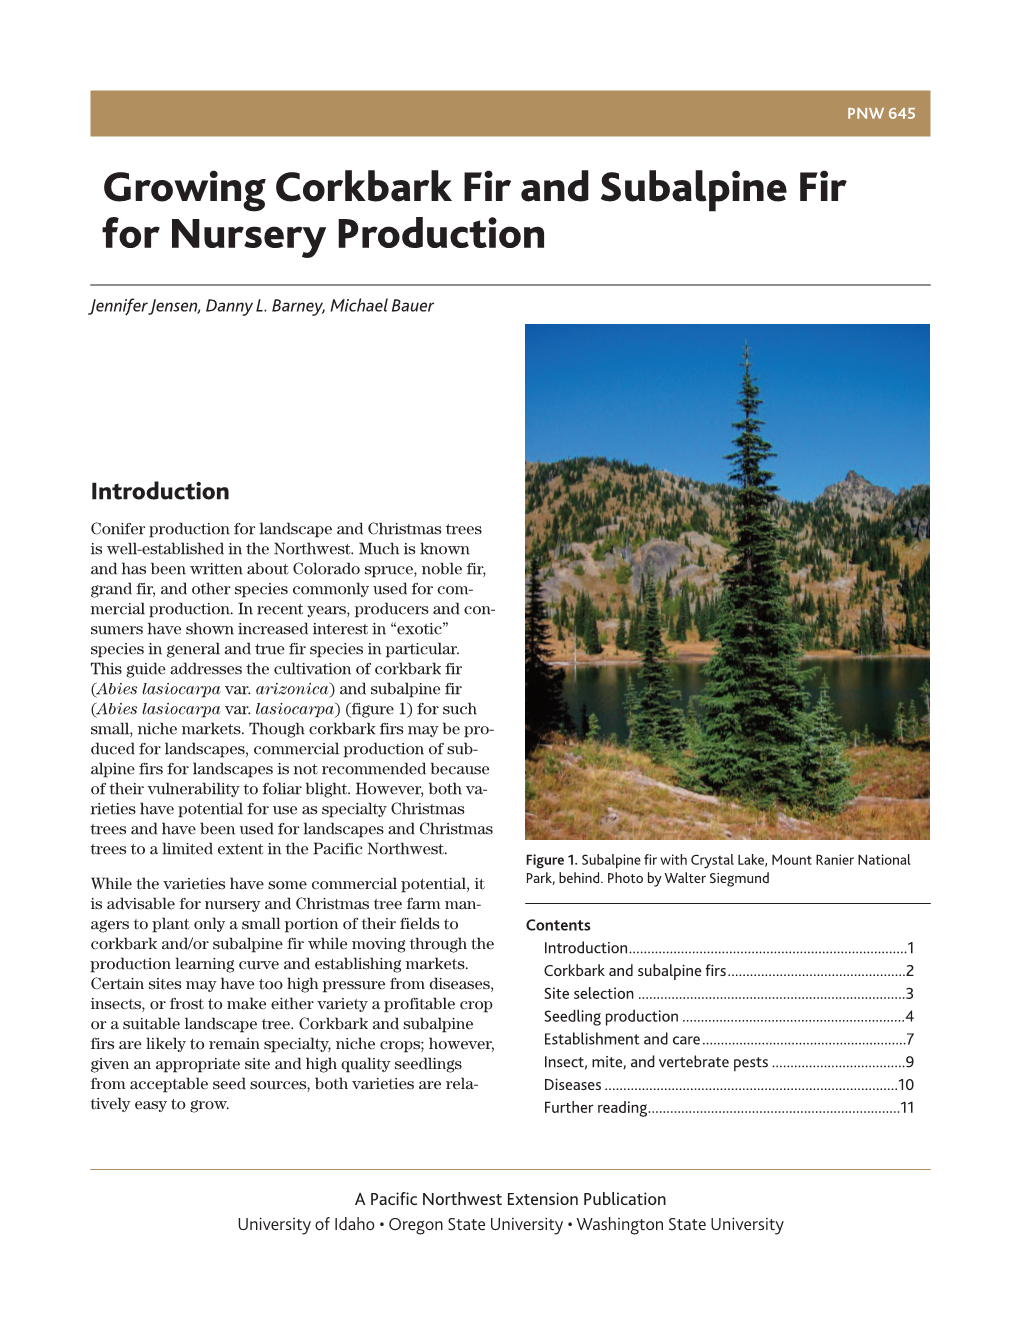 Growing Corkbark Fir and Subalpine Fir for Nursery Production